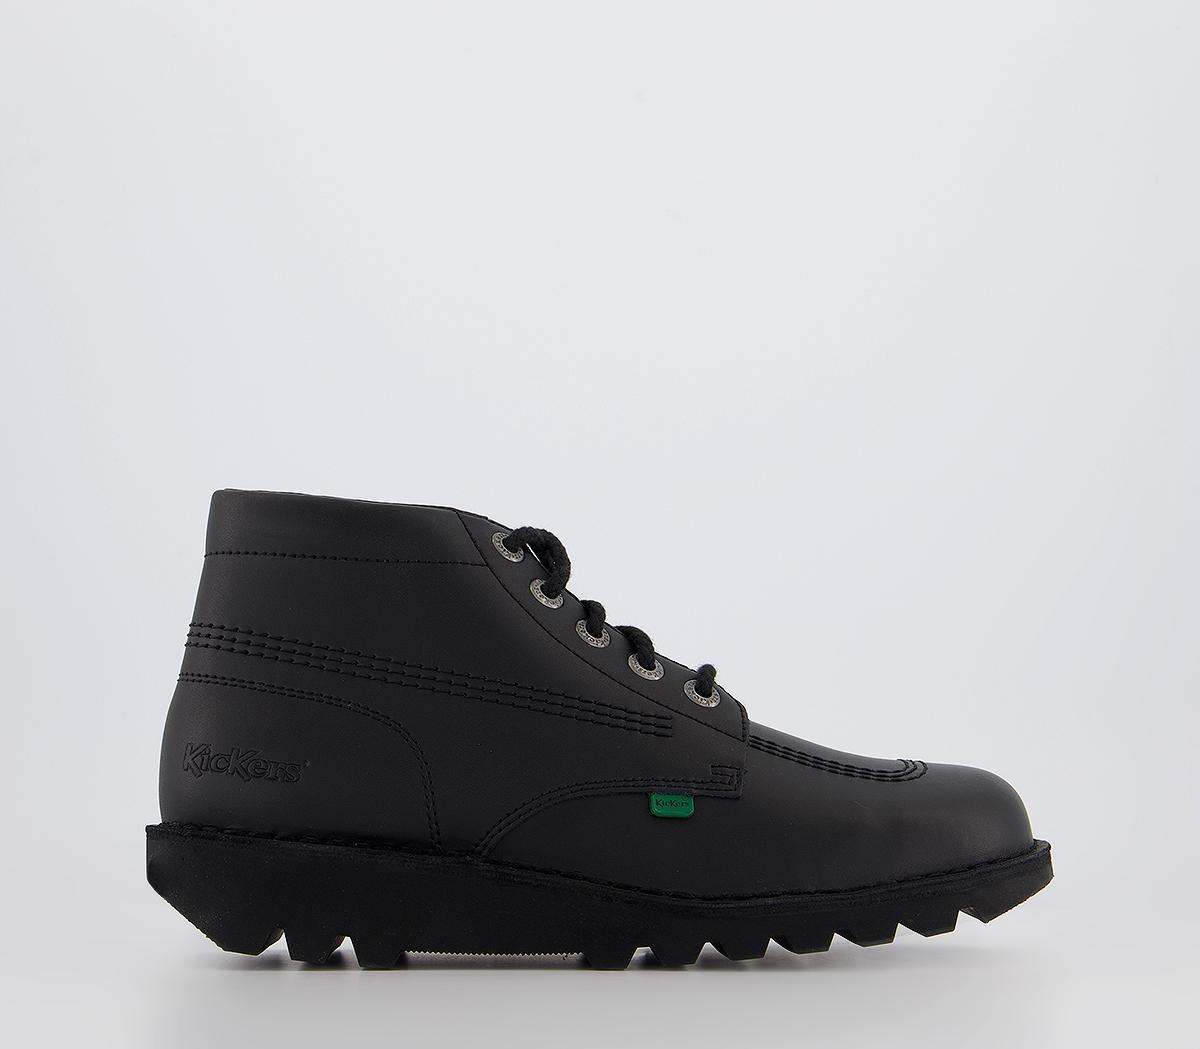 Kick Hi (m) Black Leather Boots